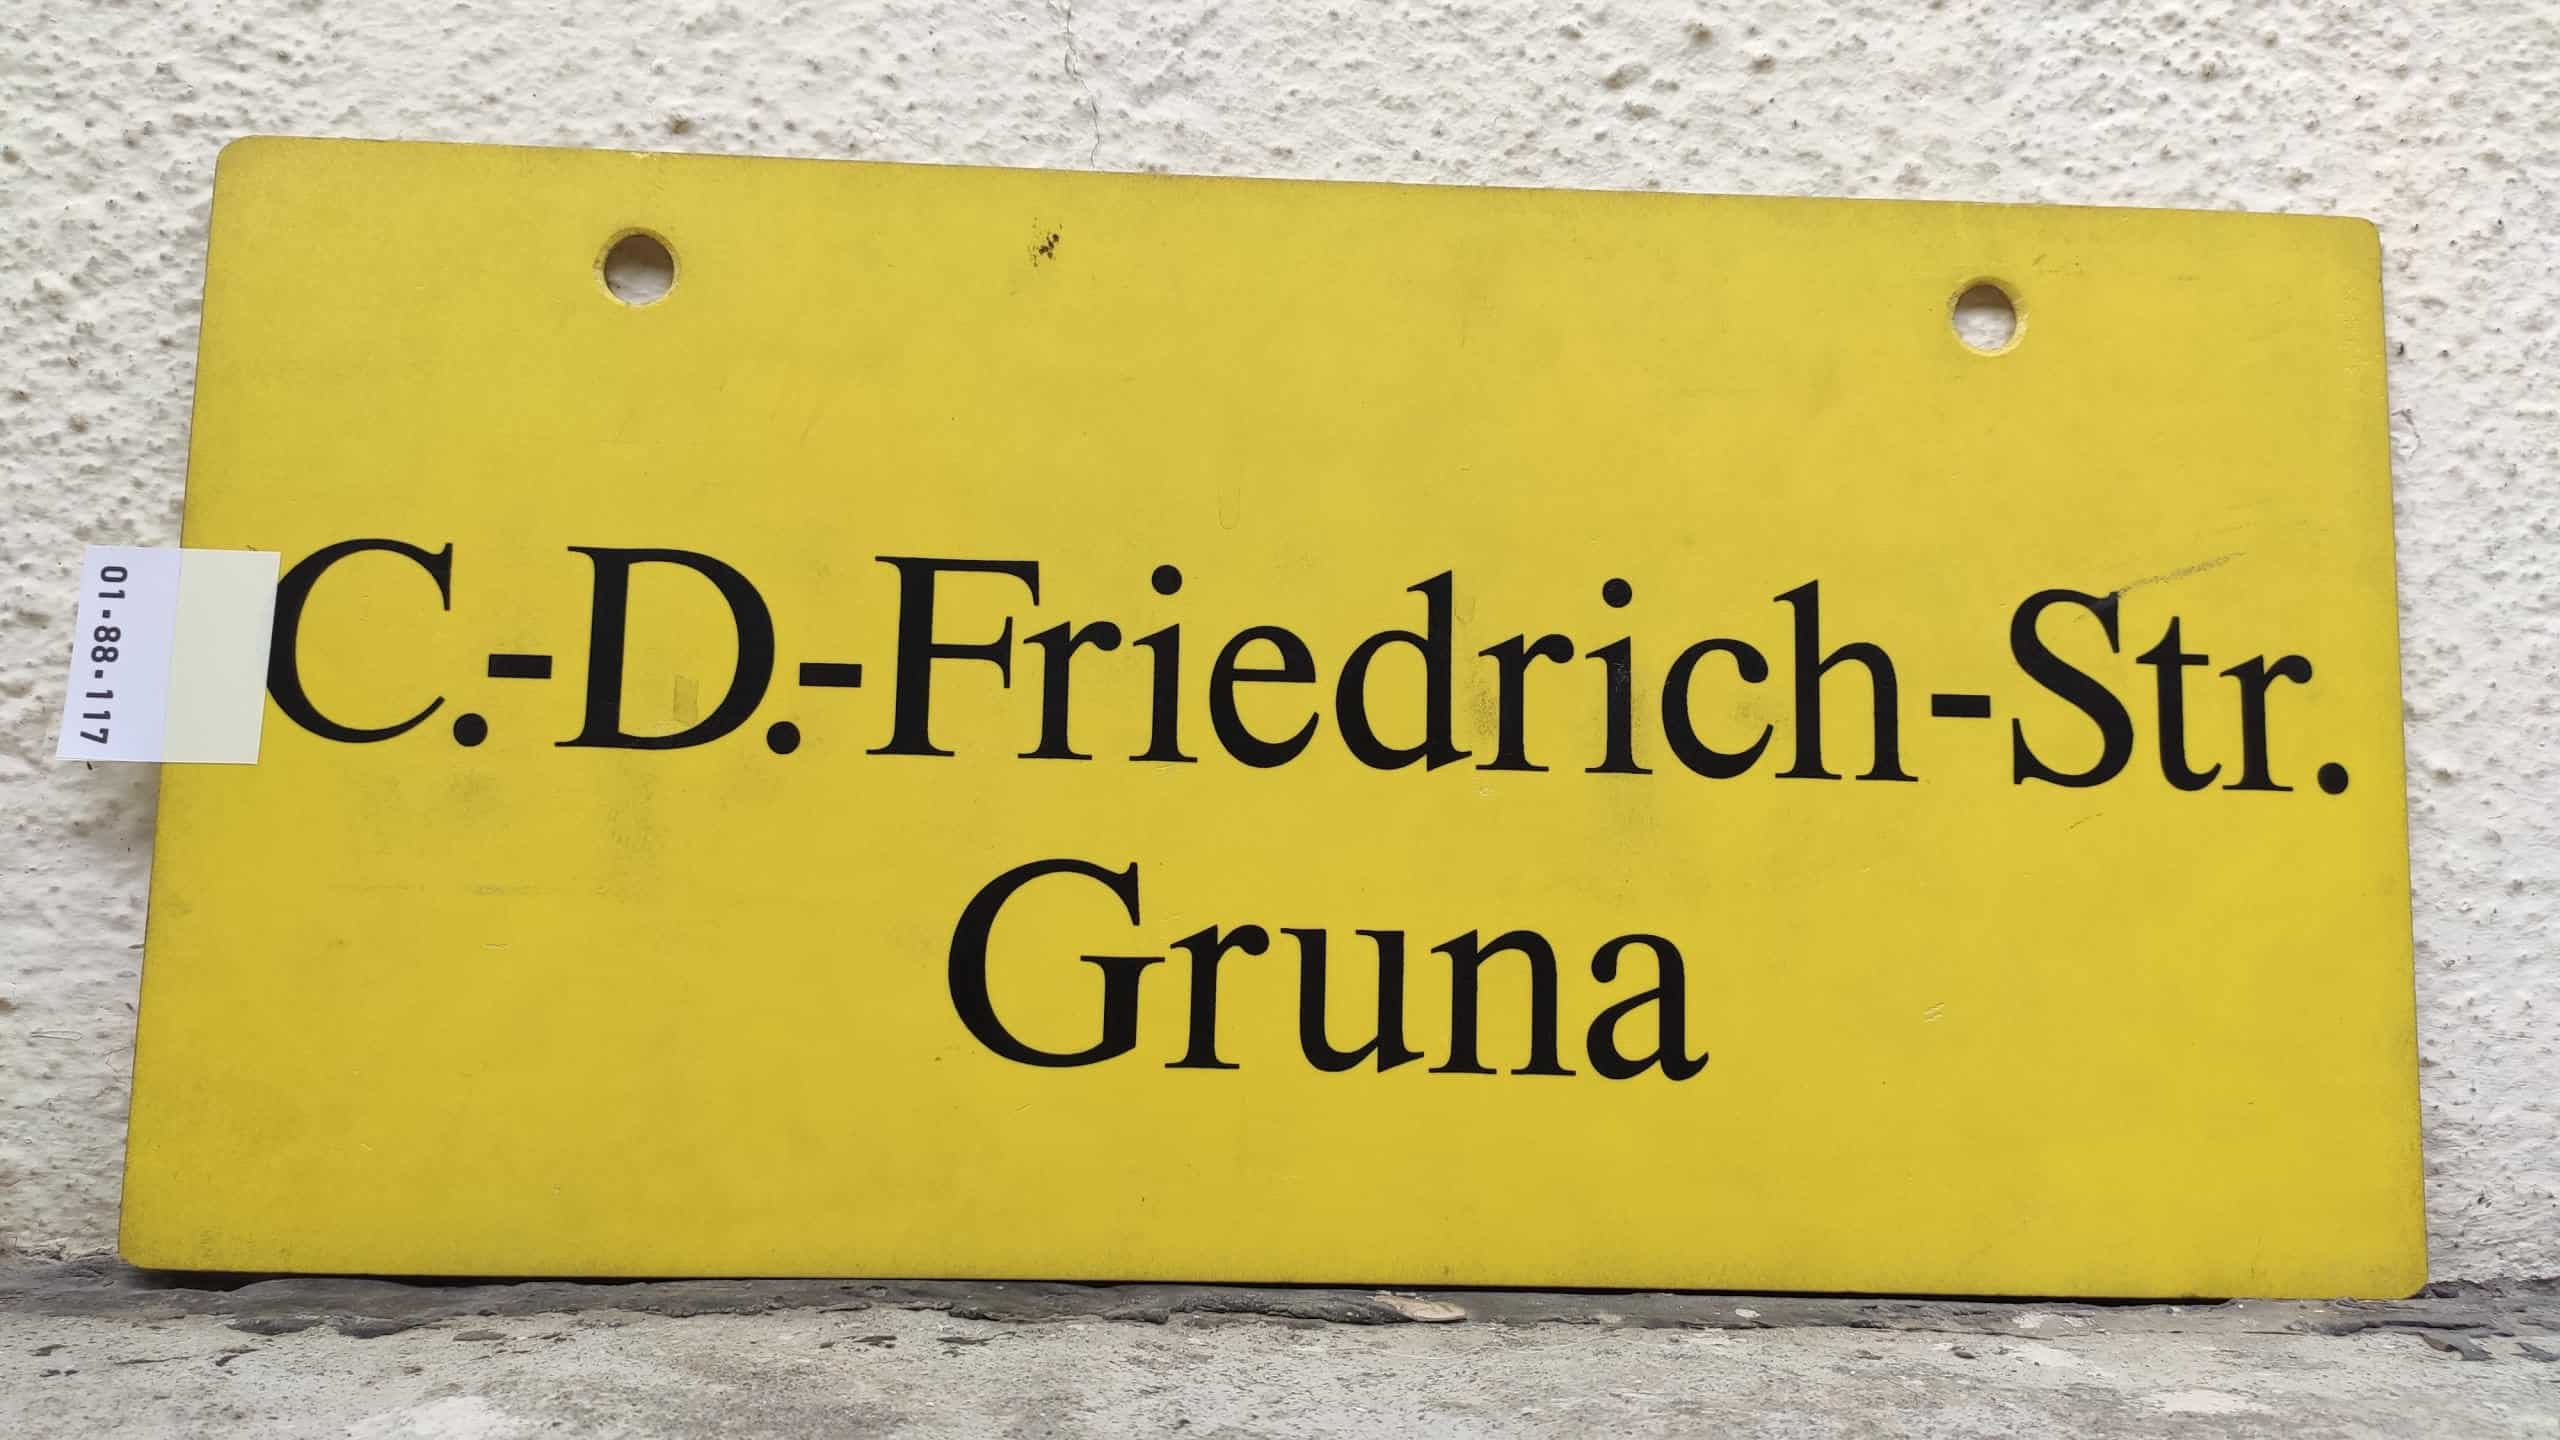 C.-D.-Friedrich-Str. Gruna